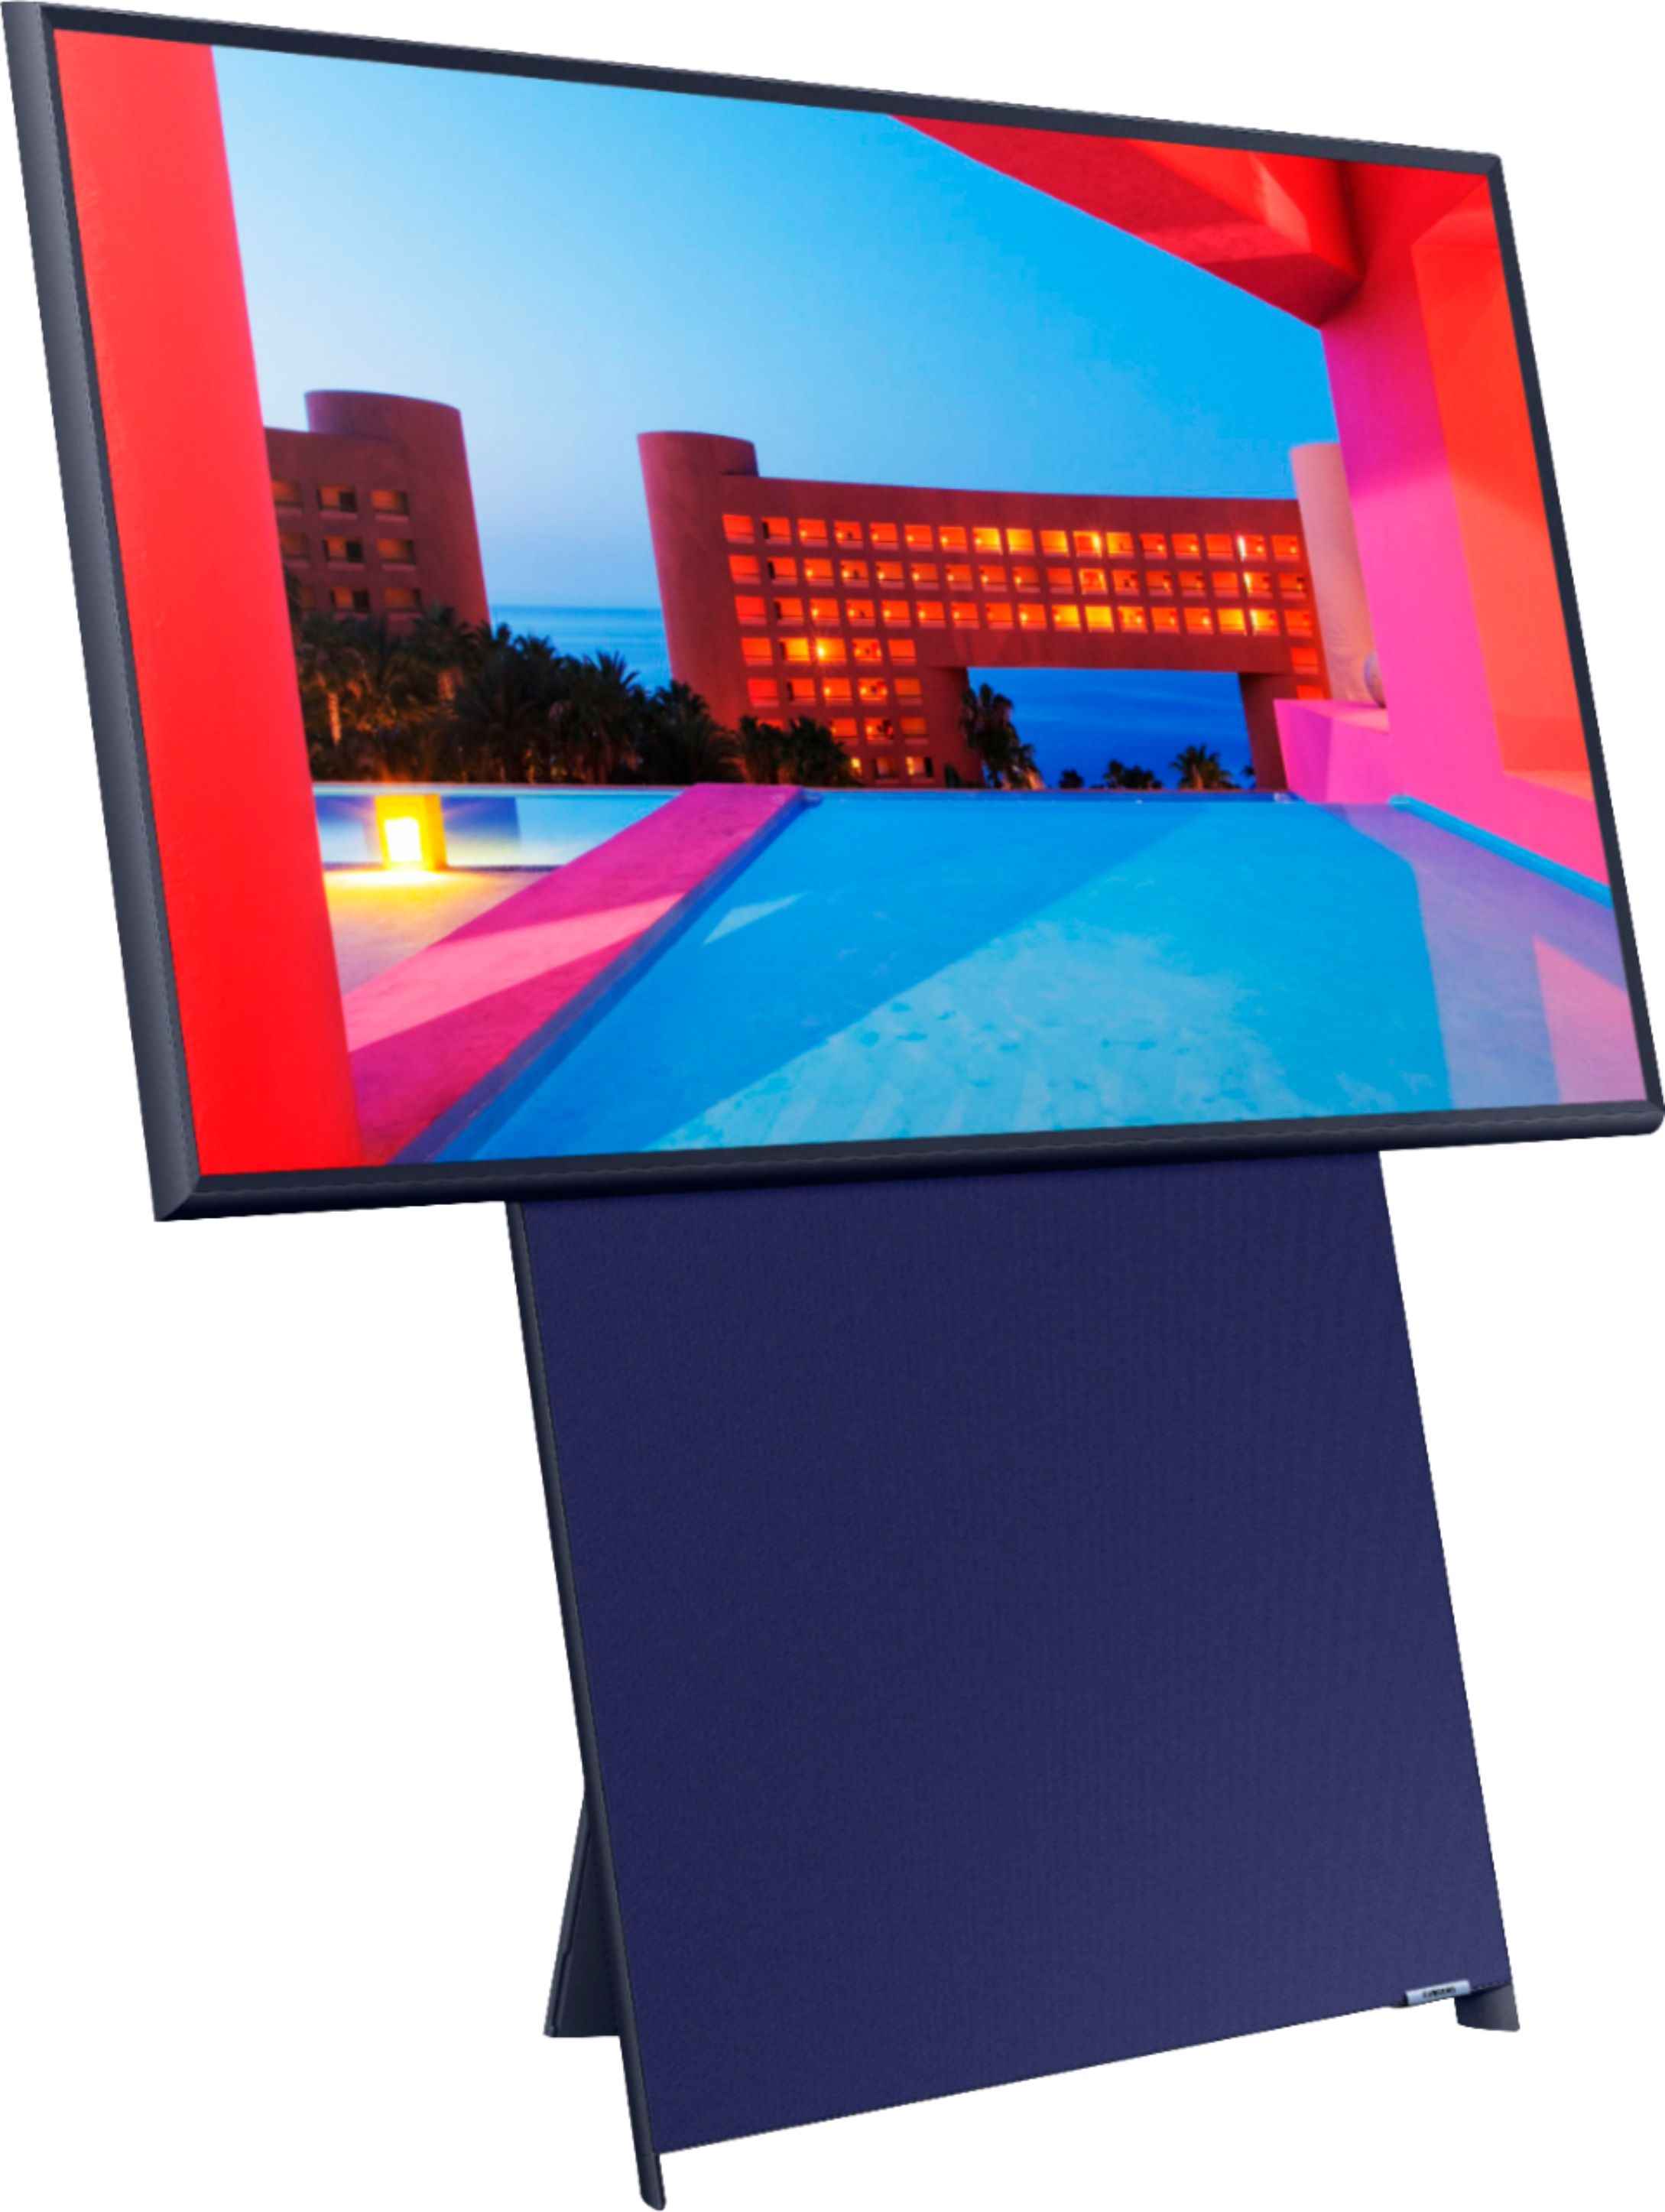 Angle View: Samsung - 43" Class The Sero Series LED 4K UHD Smart Tizen TV